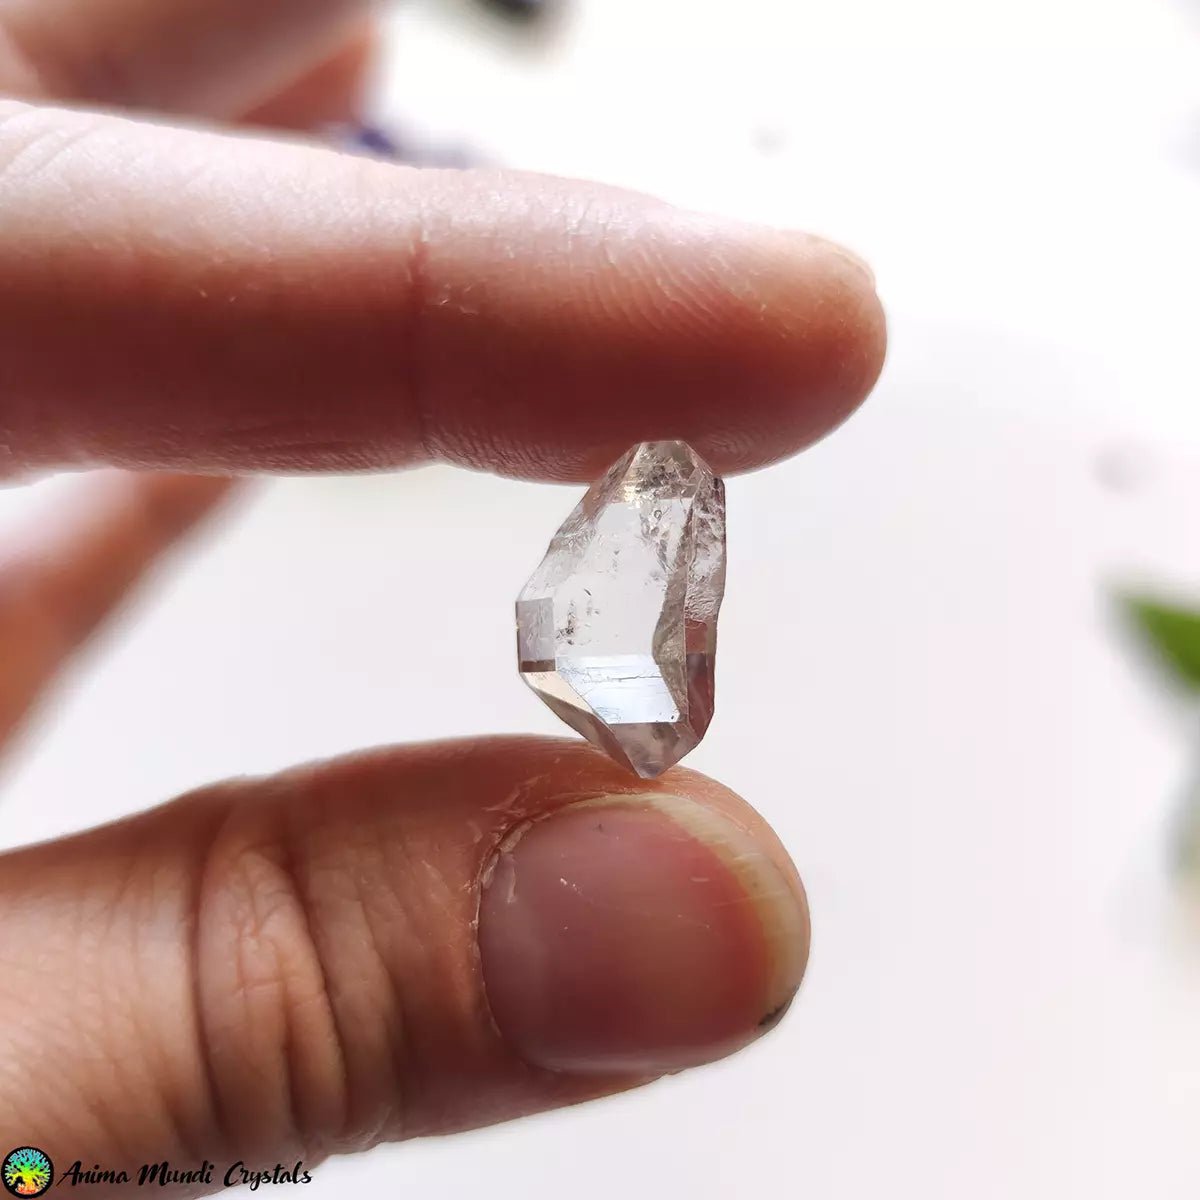 19mm "Herkimer" with Fluid Inclusion Diamond Quartz - Anima Mundi Crystals